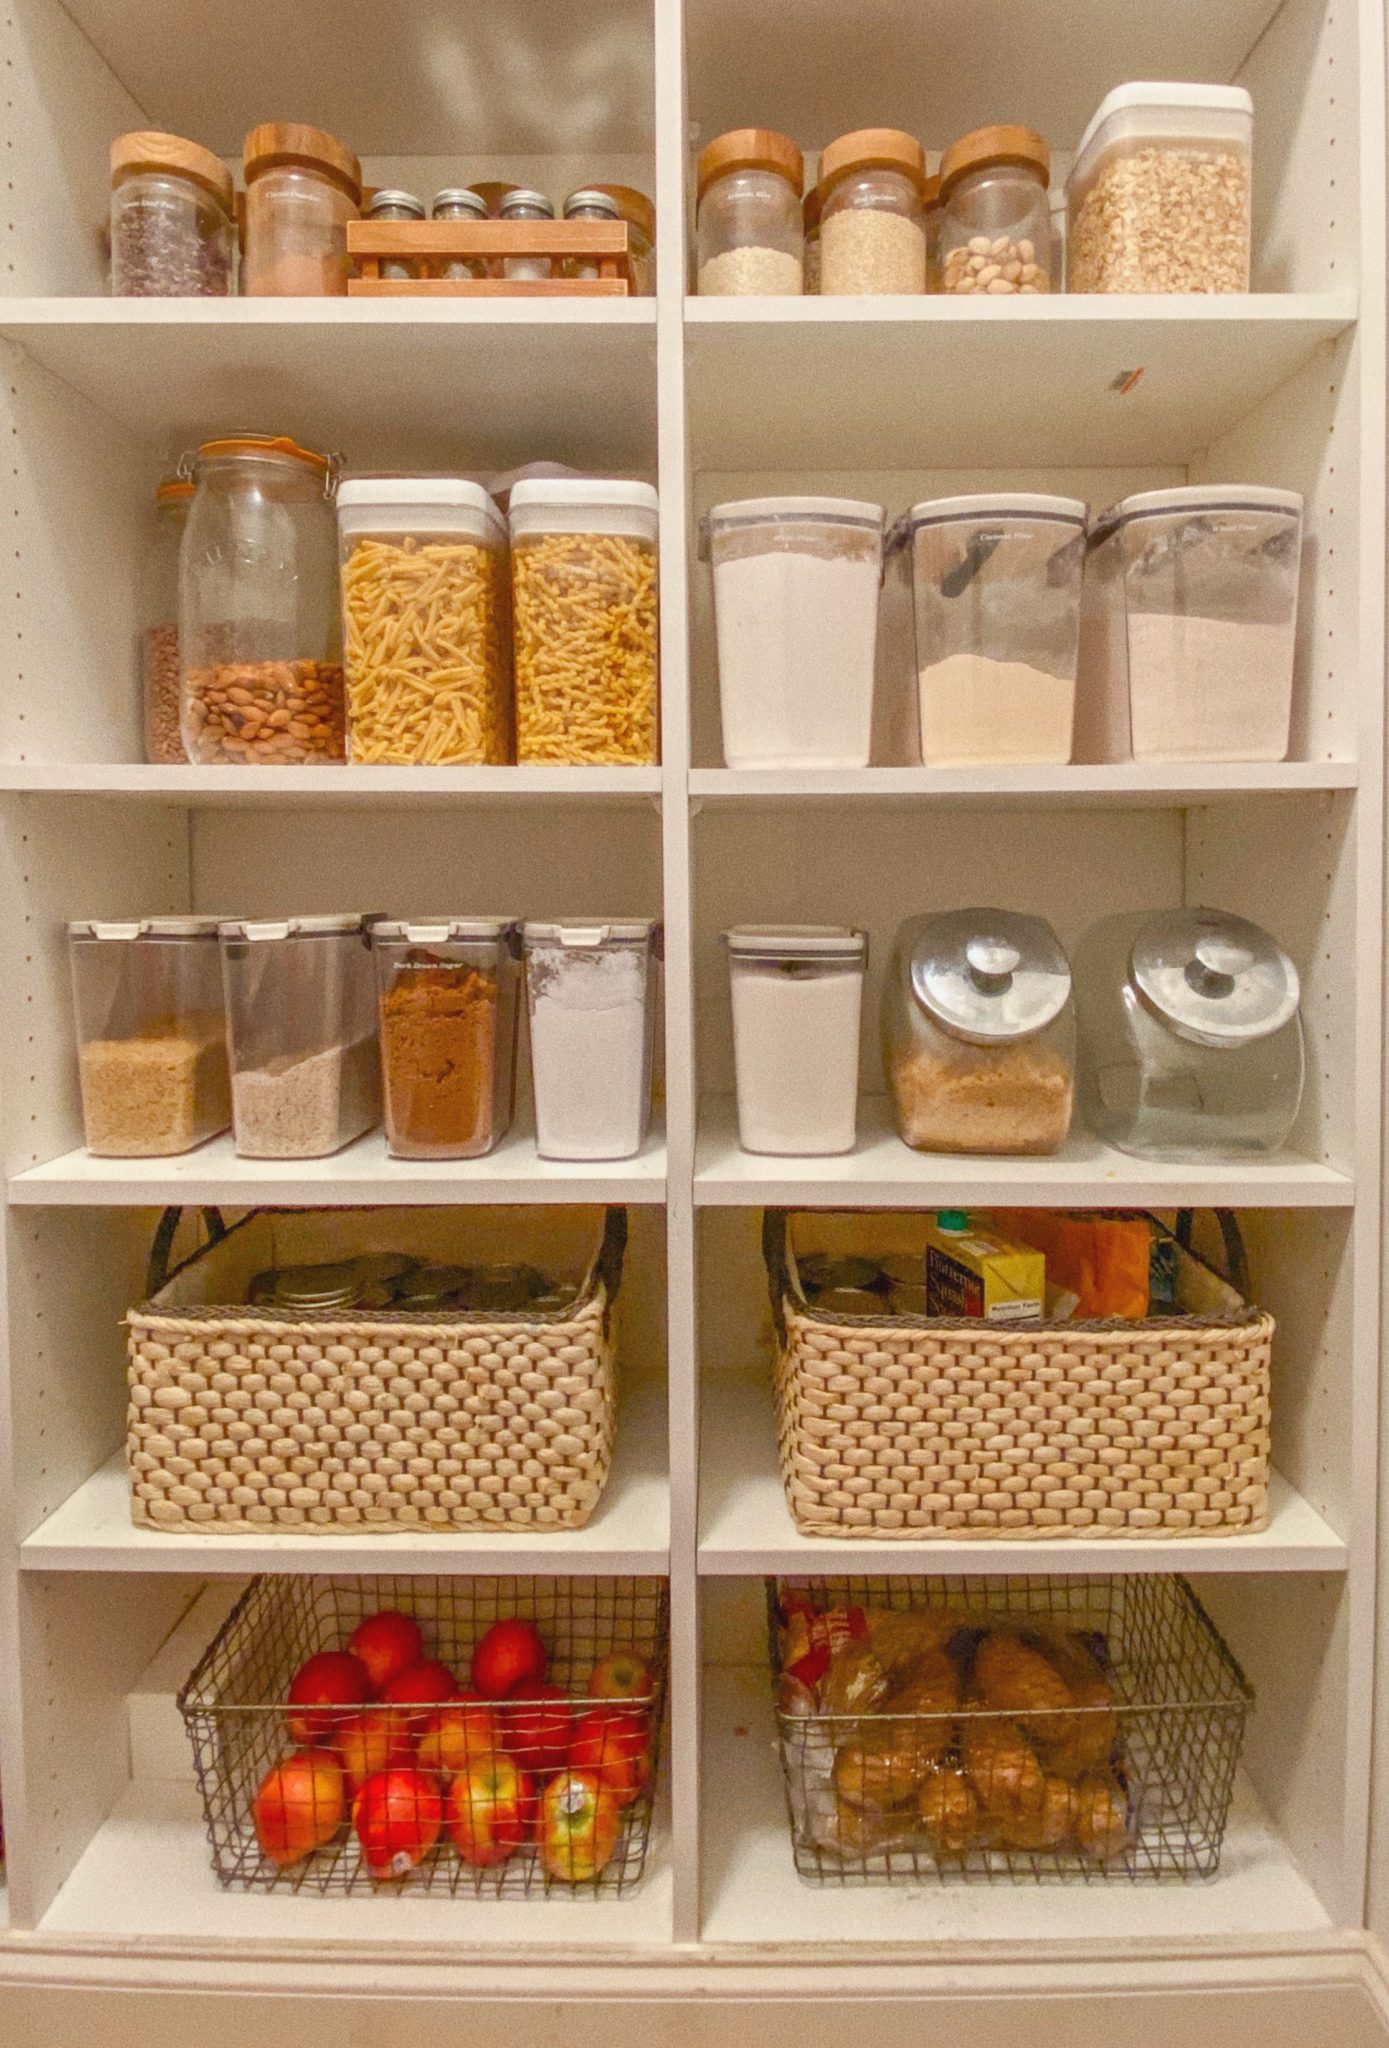 pantry design - walk in pantry - food storage